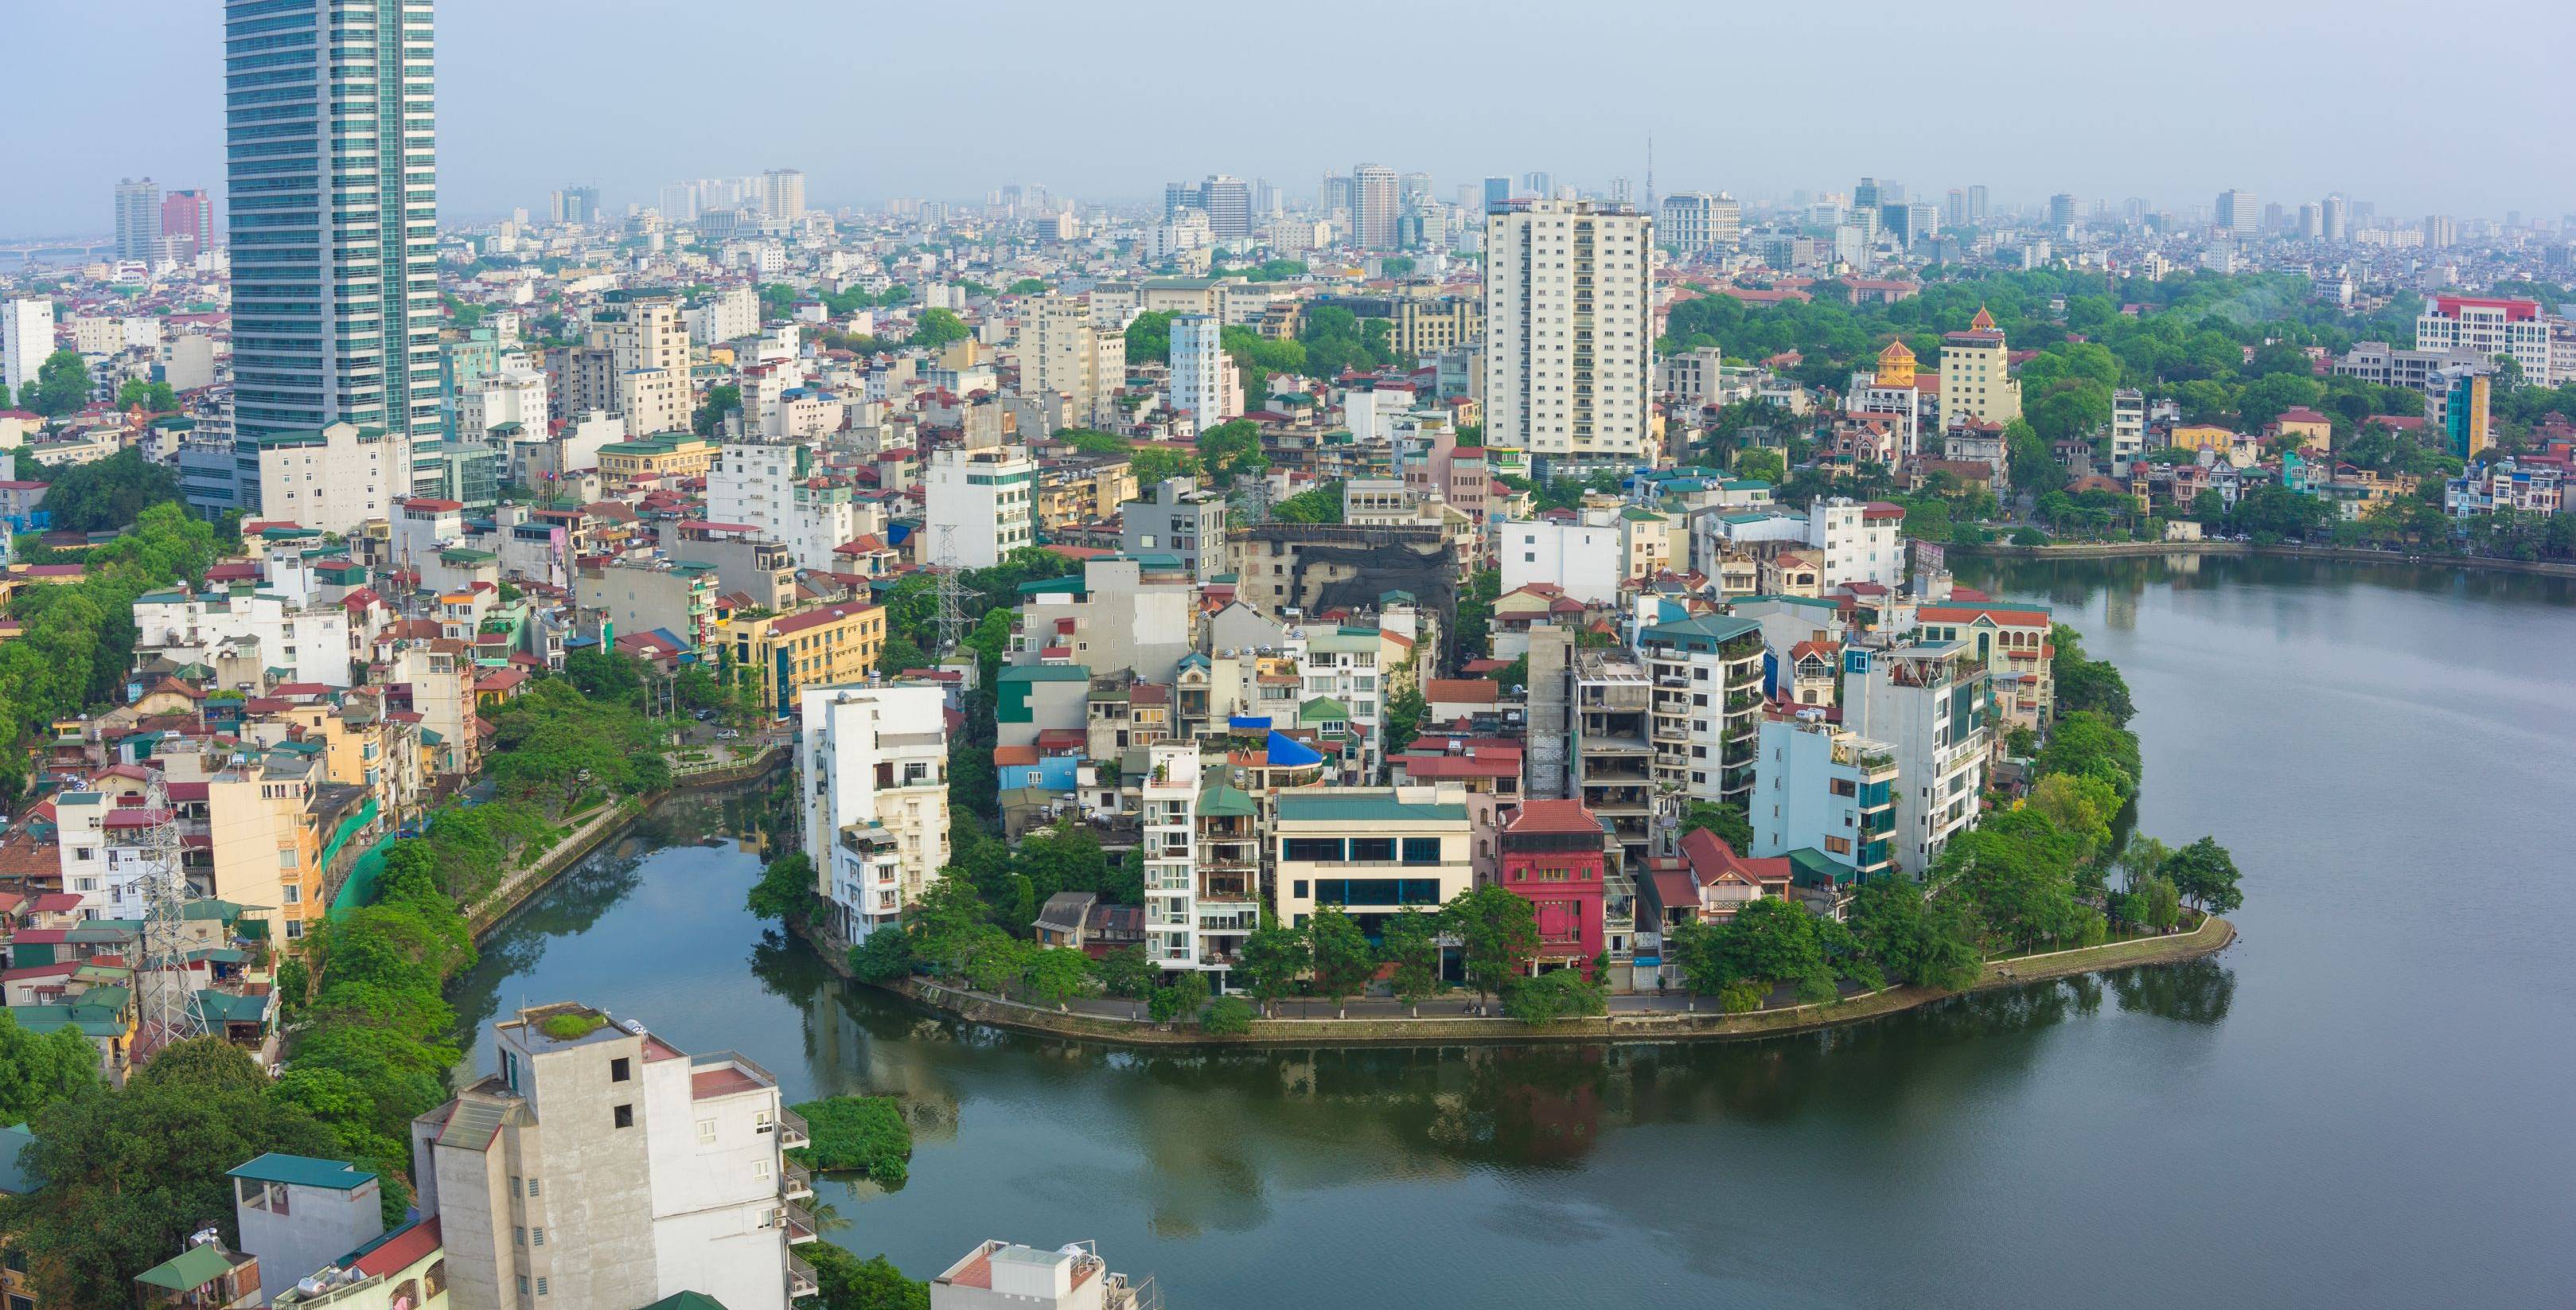 
¡Bienvenidos a Hanoi - Vietnam!